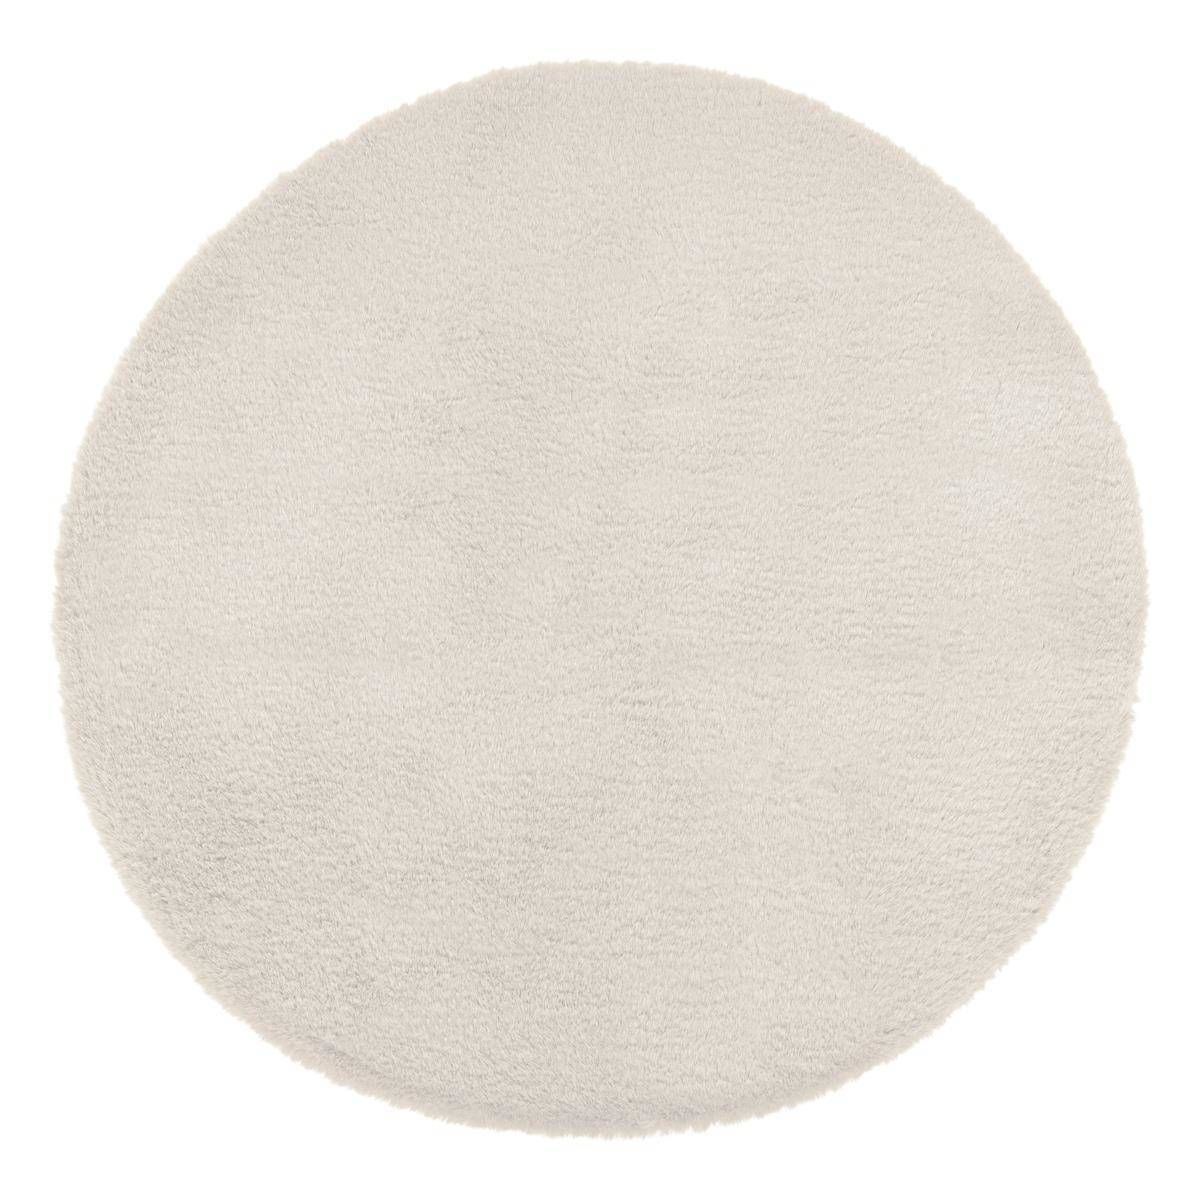 Atmosphera Bílý kulatý koberec, 80 cm - EDAXO.CZ s.r.o.